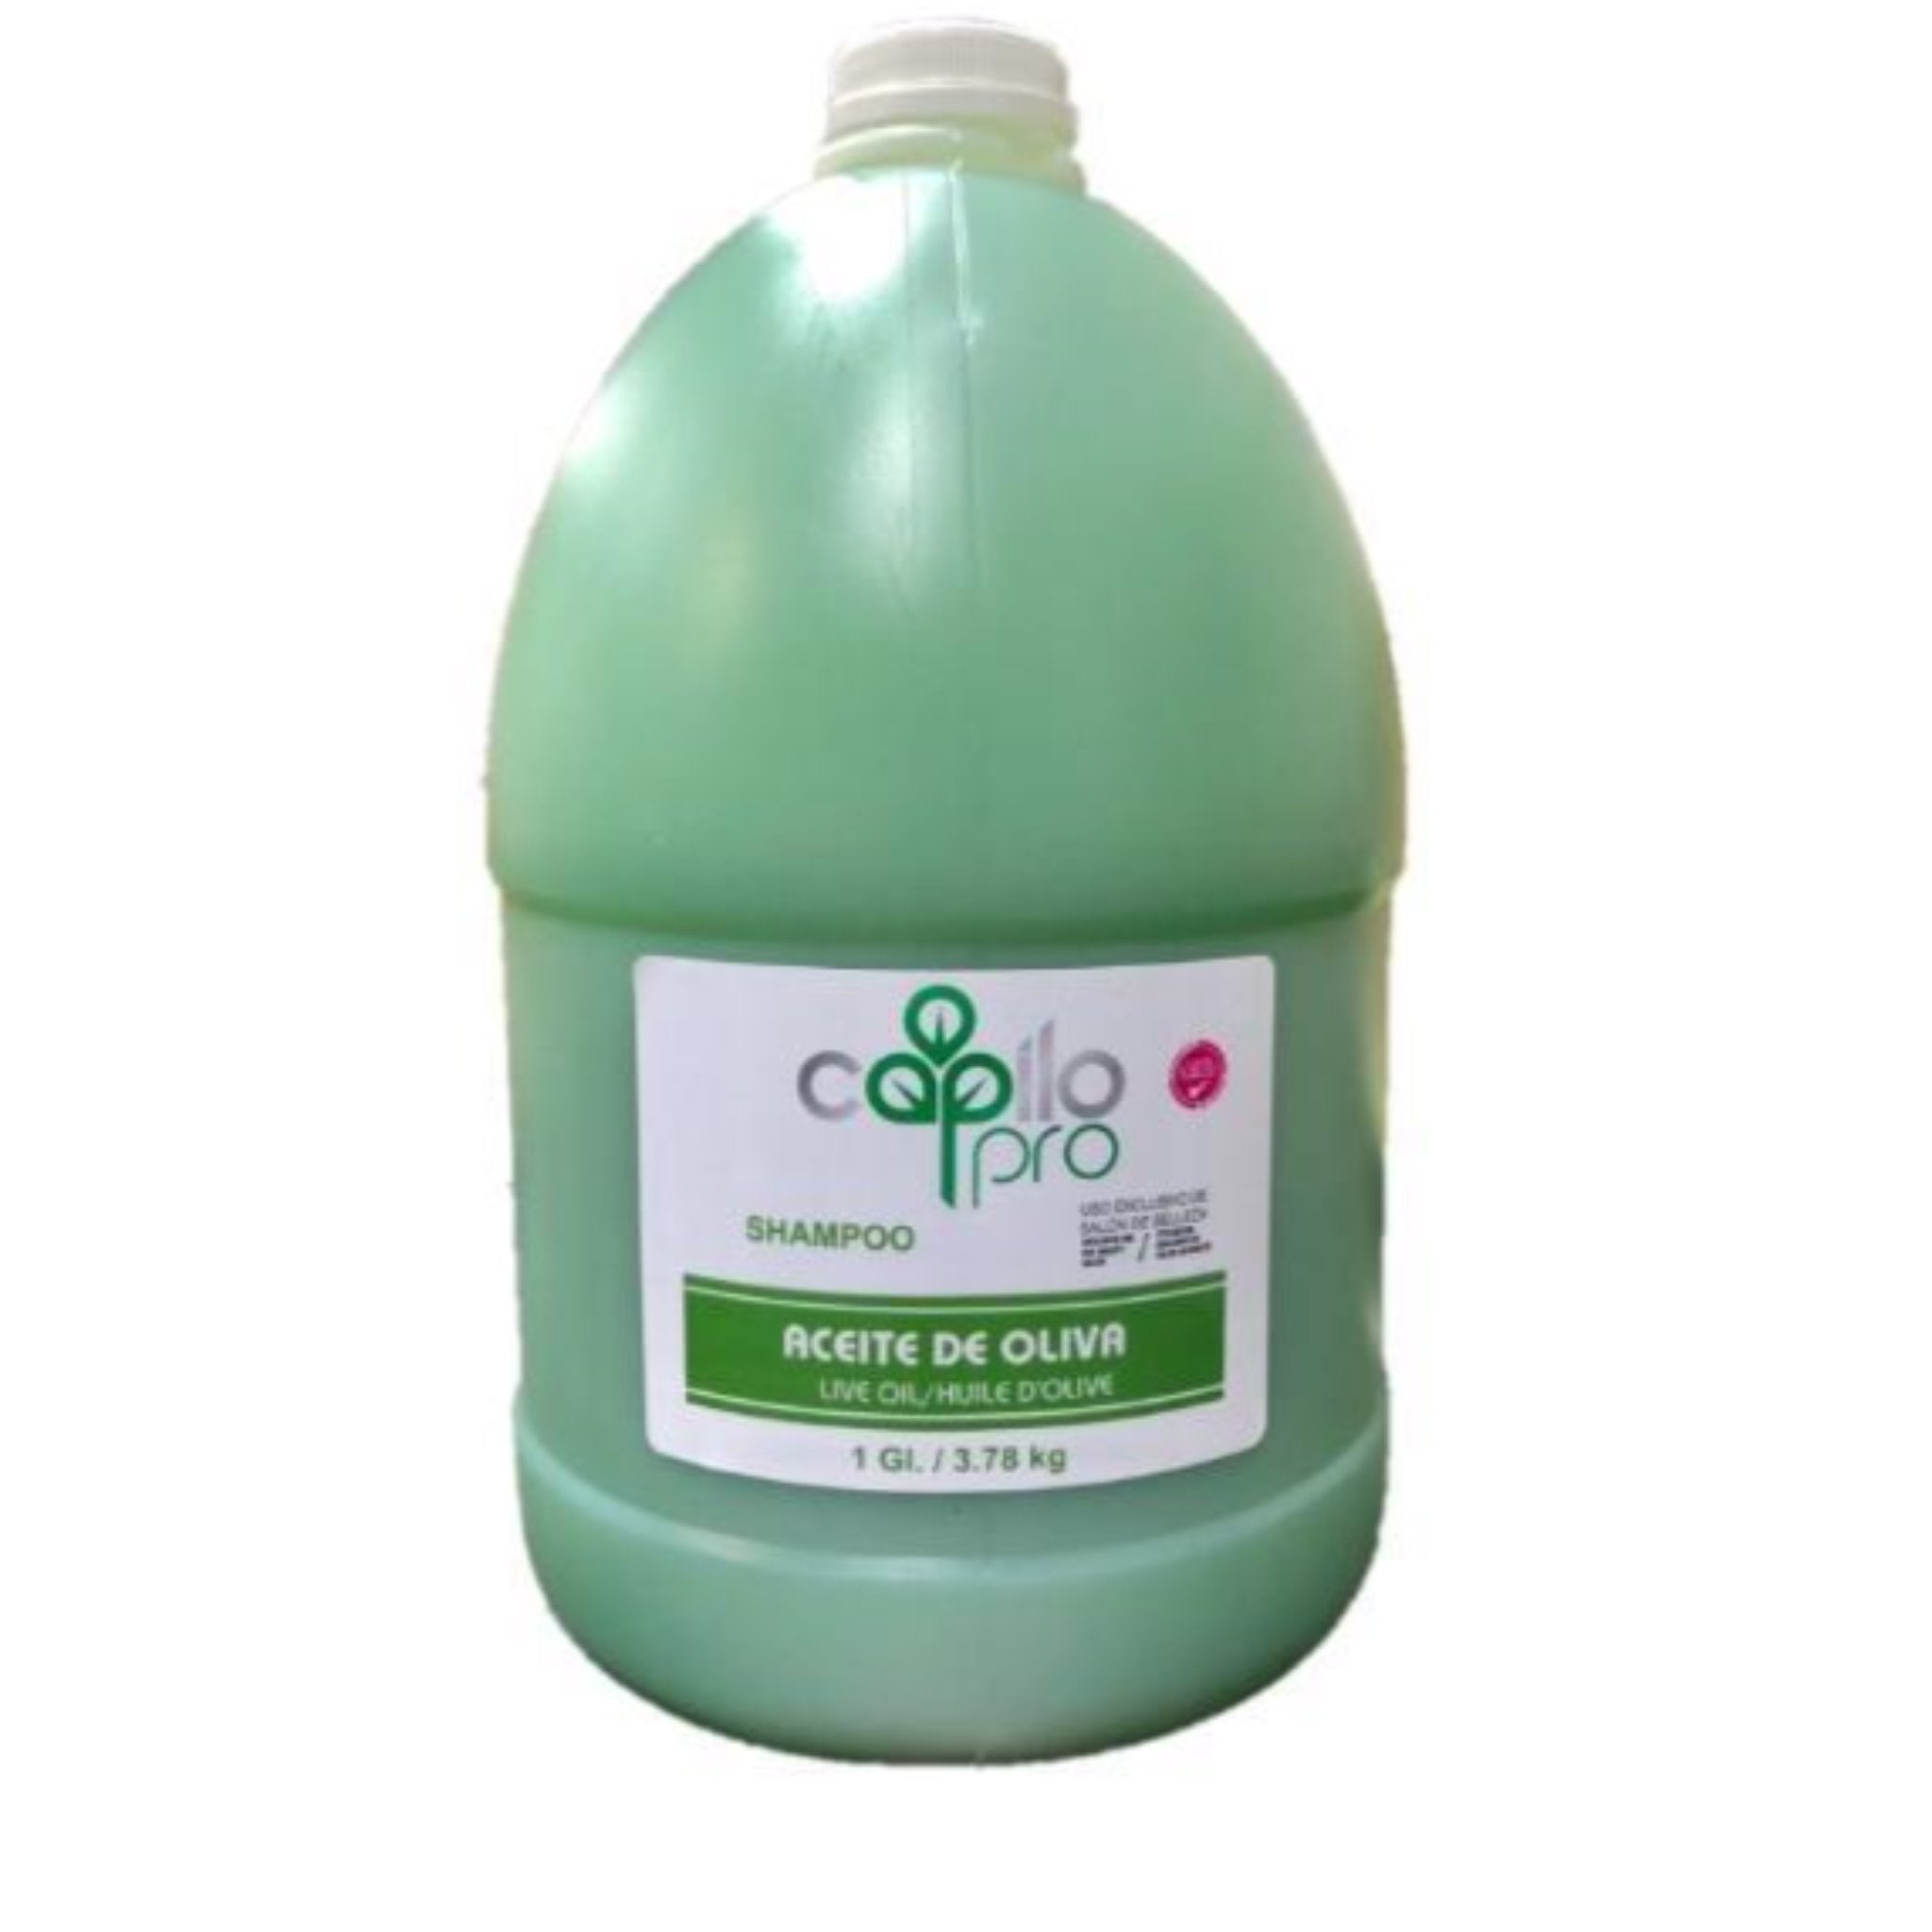 Capilo Olive Oil Shampoo 1 GI